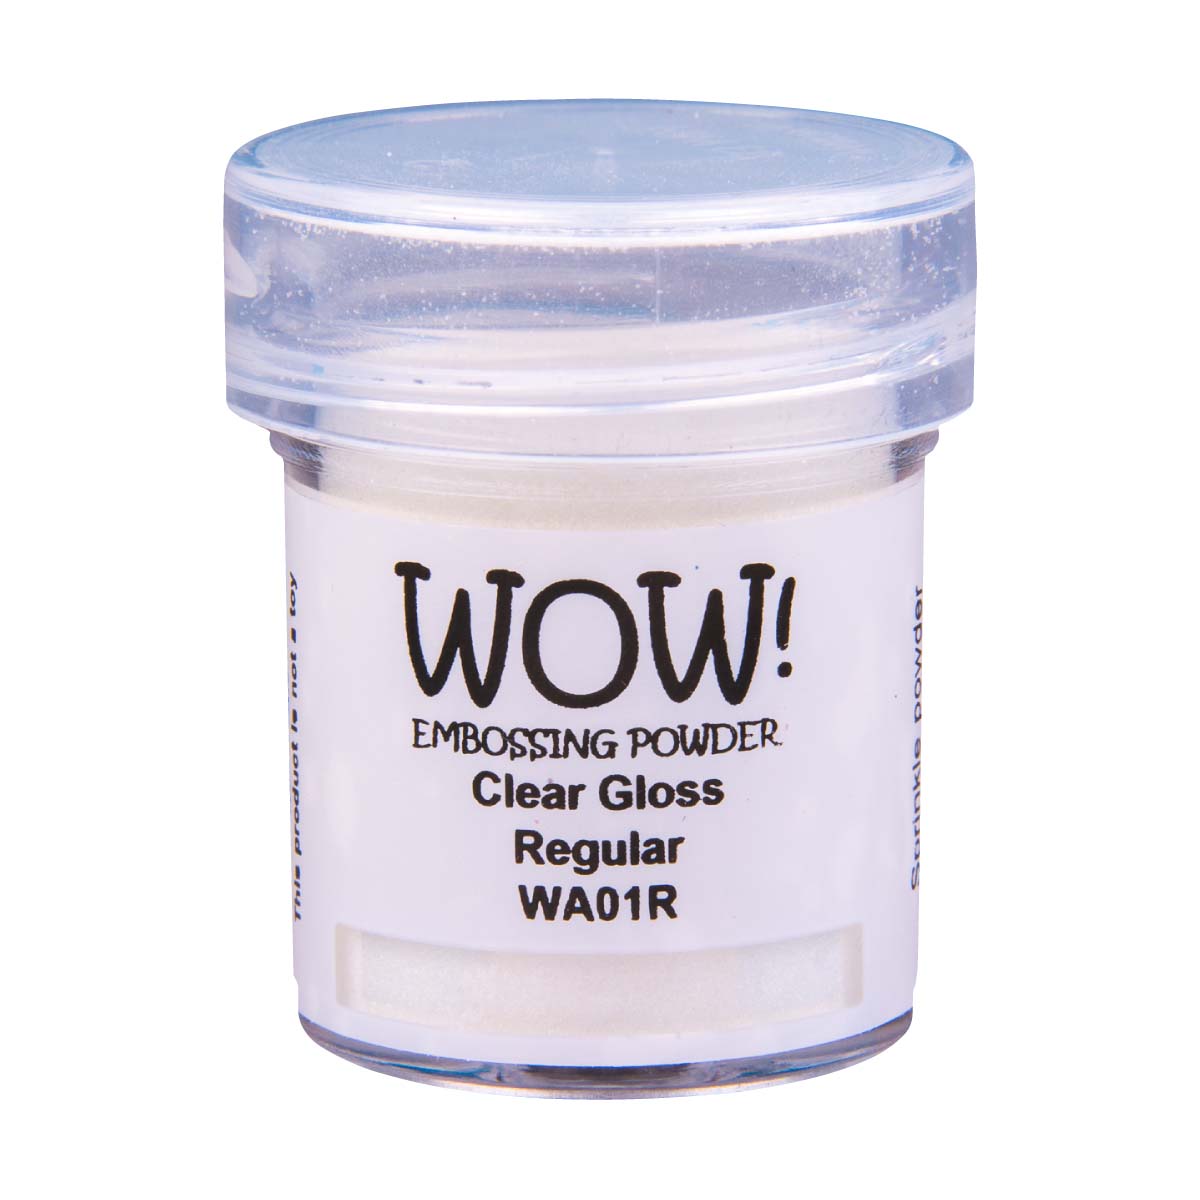 Clear Embossing Powder Clear Gloss Regular 15Ml Jar Wow